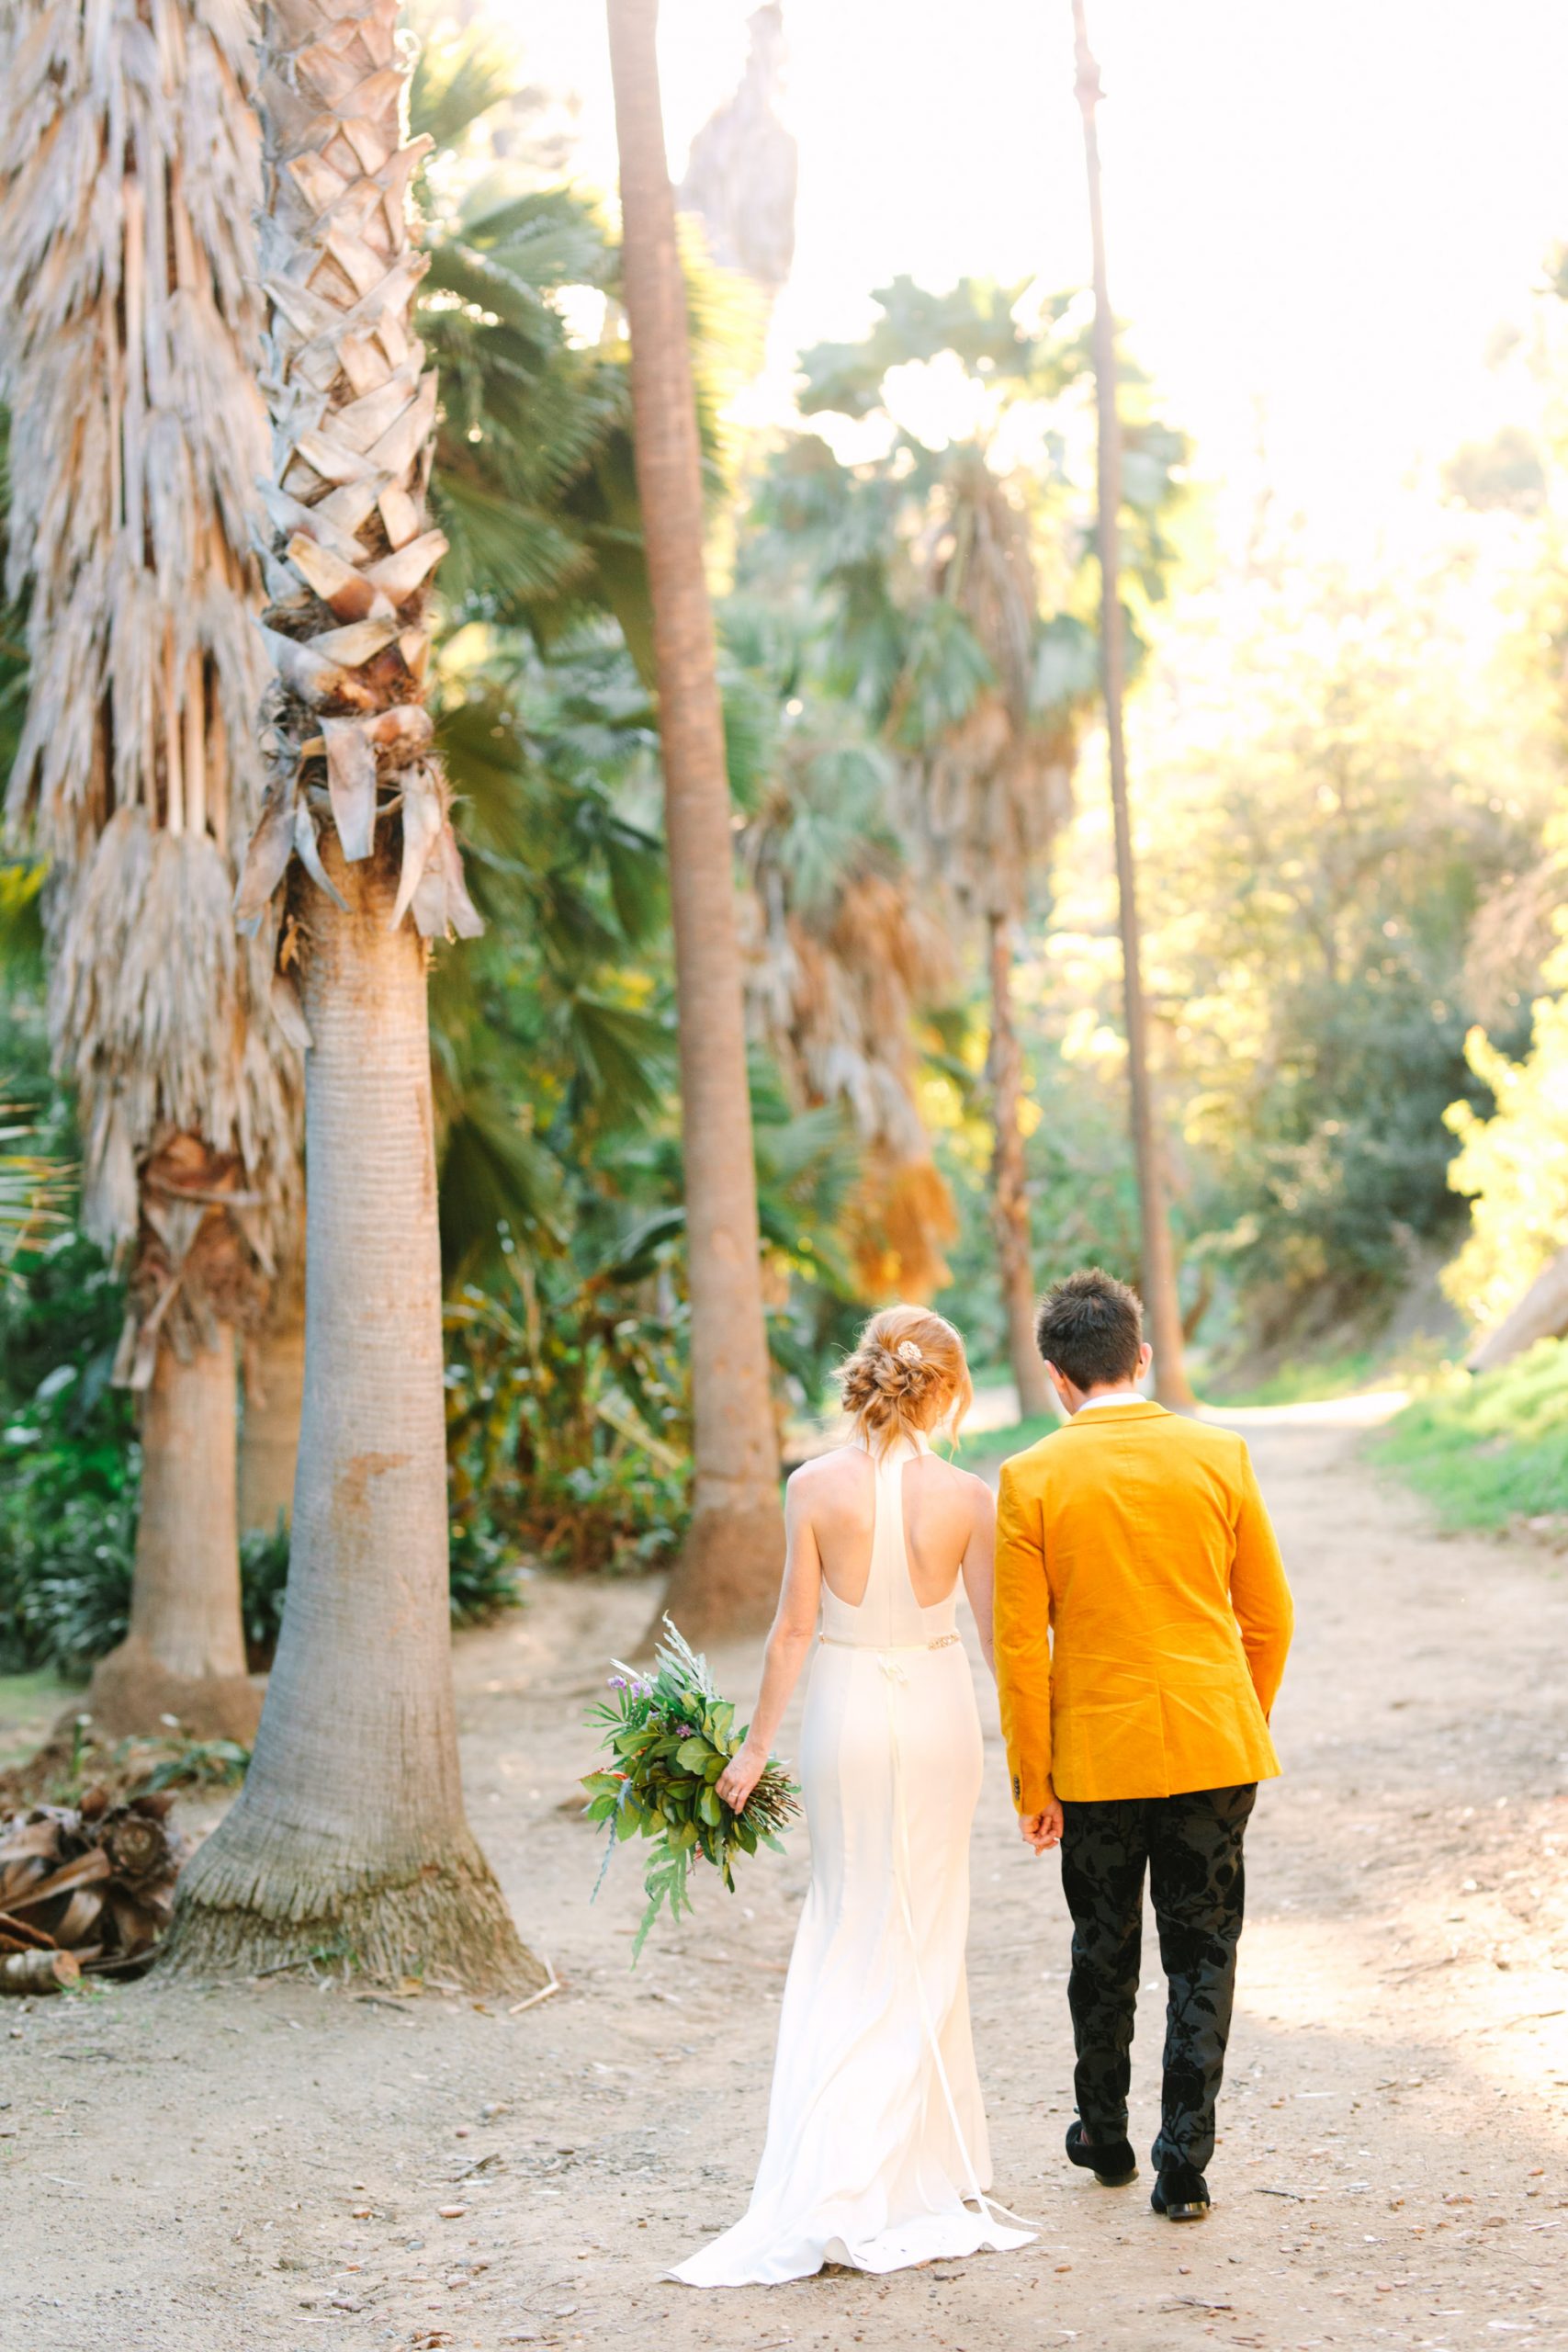 Bride and groom walking among palm trees - www.marycostaweddings.com